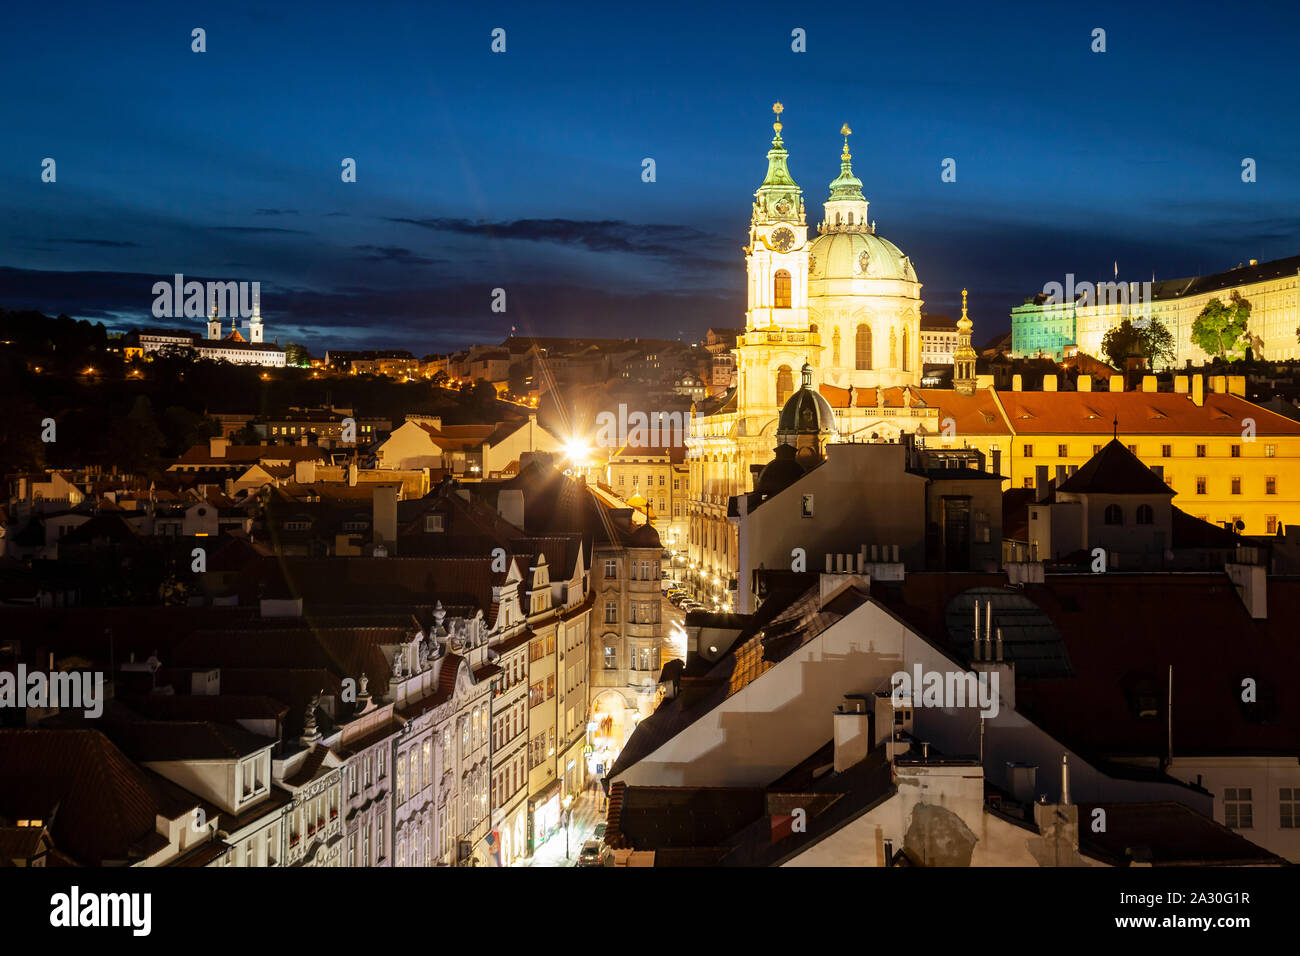 St Nicholas church towers over Mala Strana at nightfall, Prague. Stock Photo